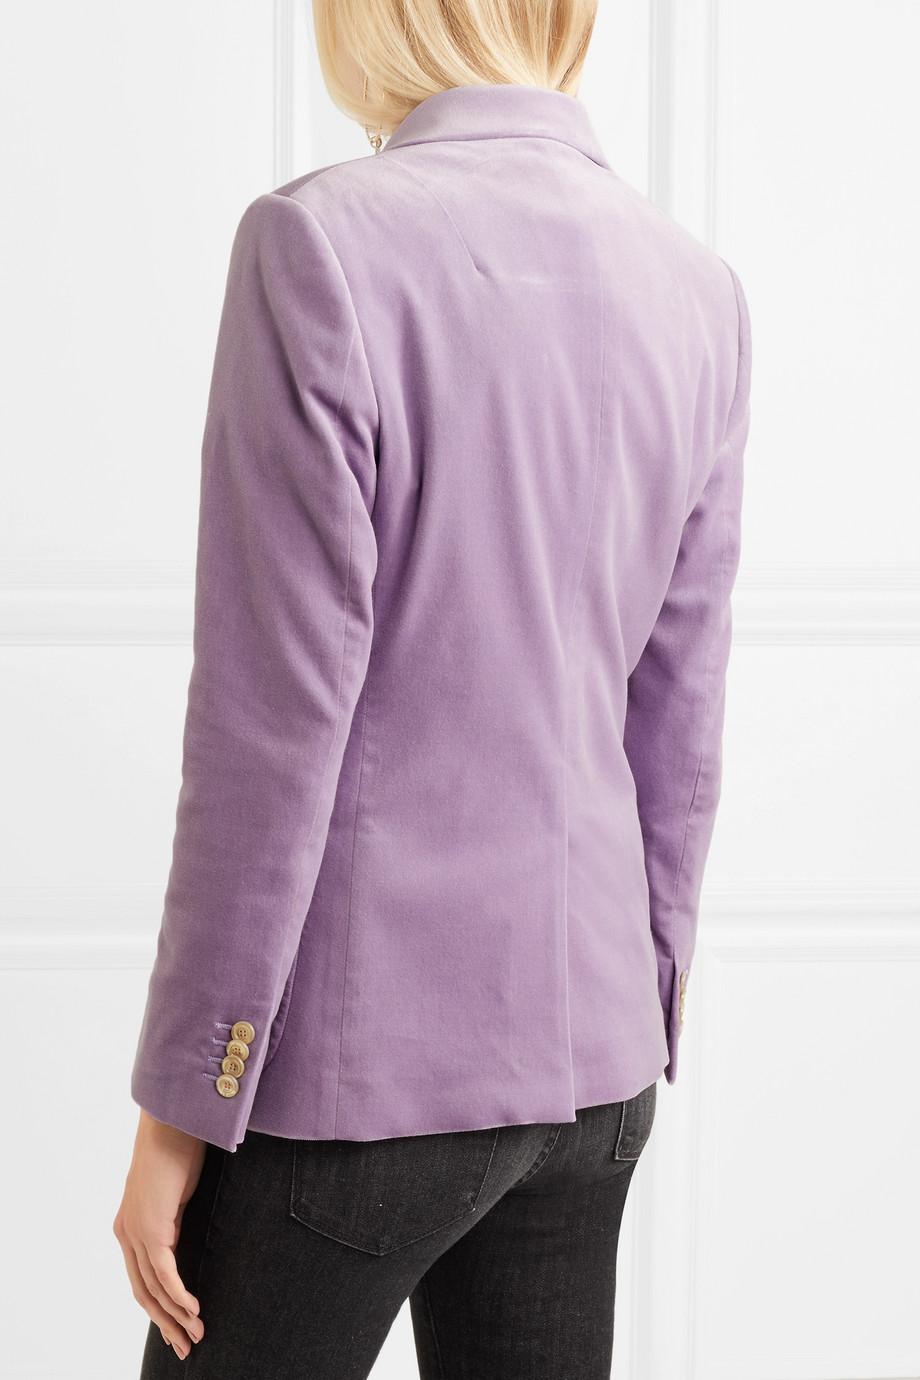 Gucci Cotton-blend Velvet Blazer in Lilac (Purple) | Lyst